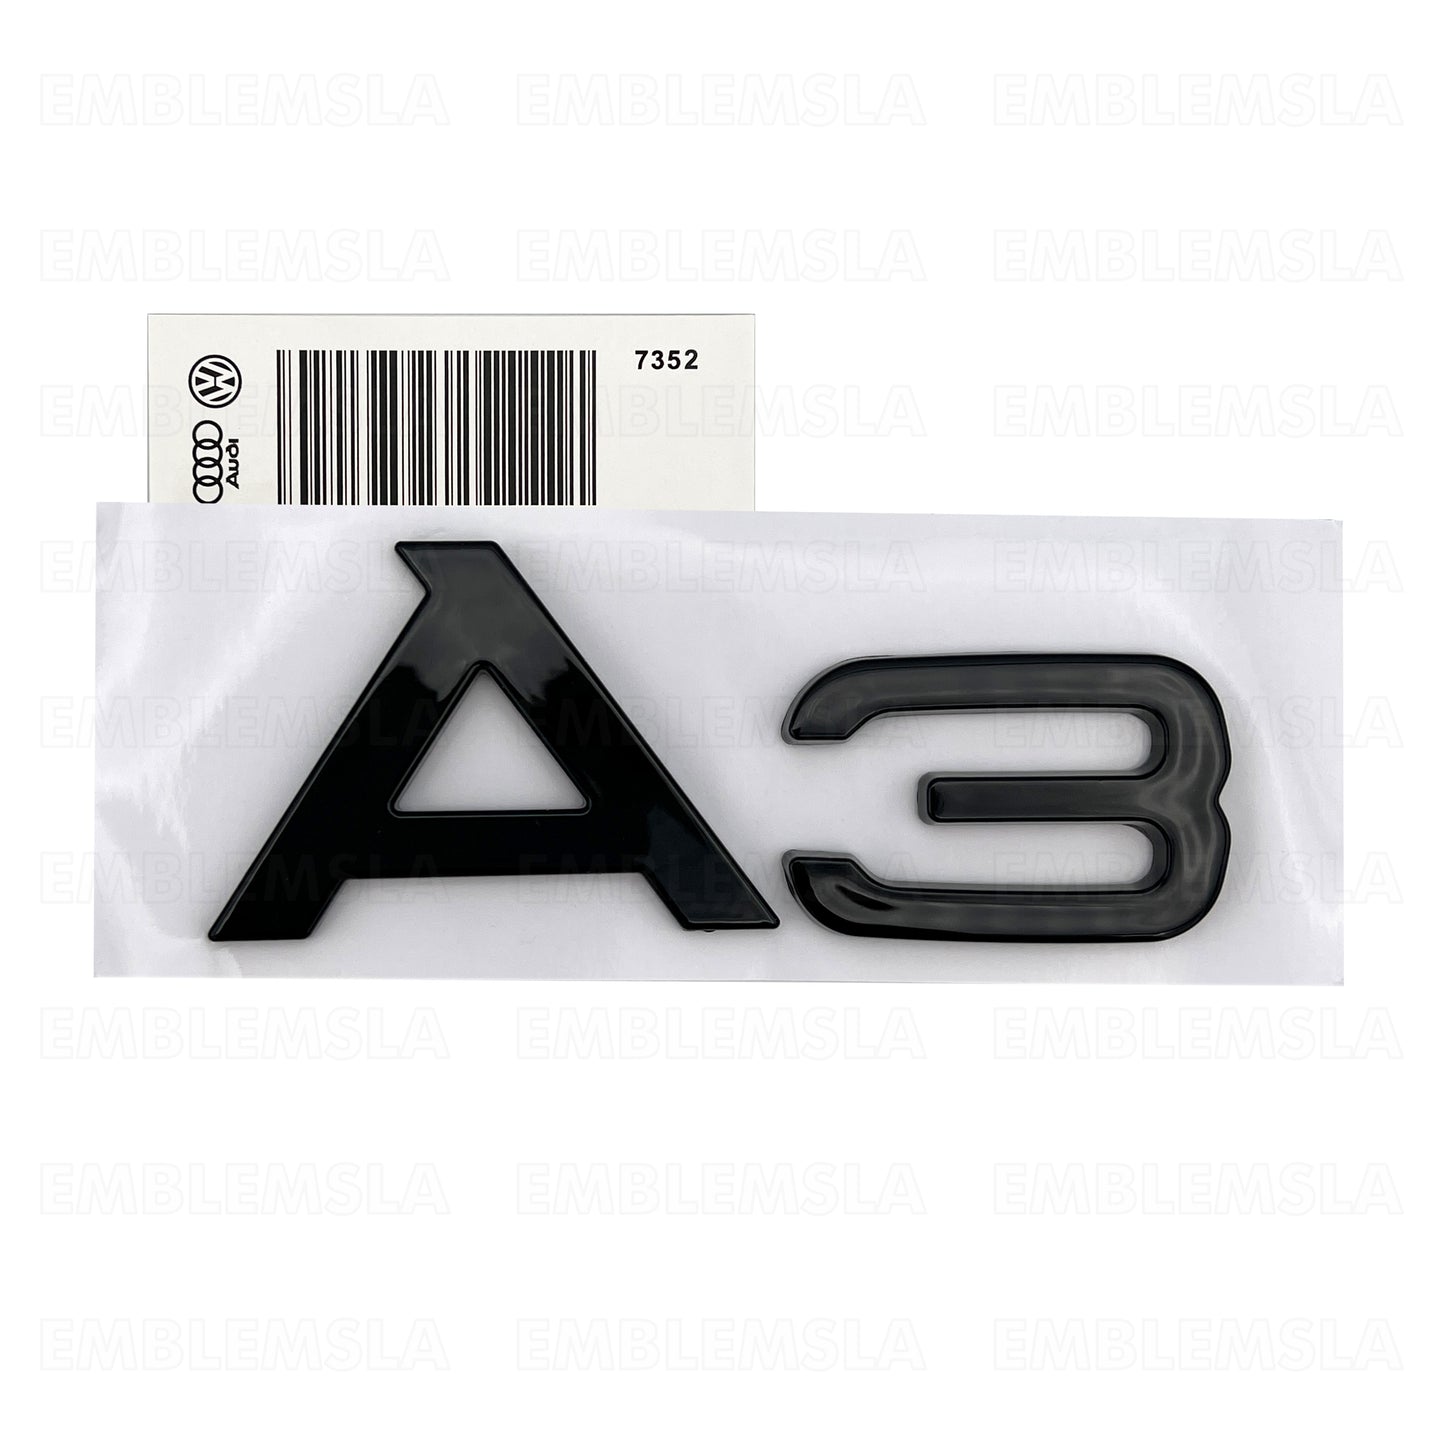 Audi A3 Gloss Black Emblem 3D Badge Rear Trunk Lid for S Line Logo Nameplate